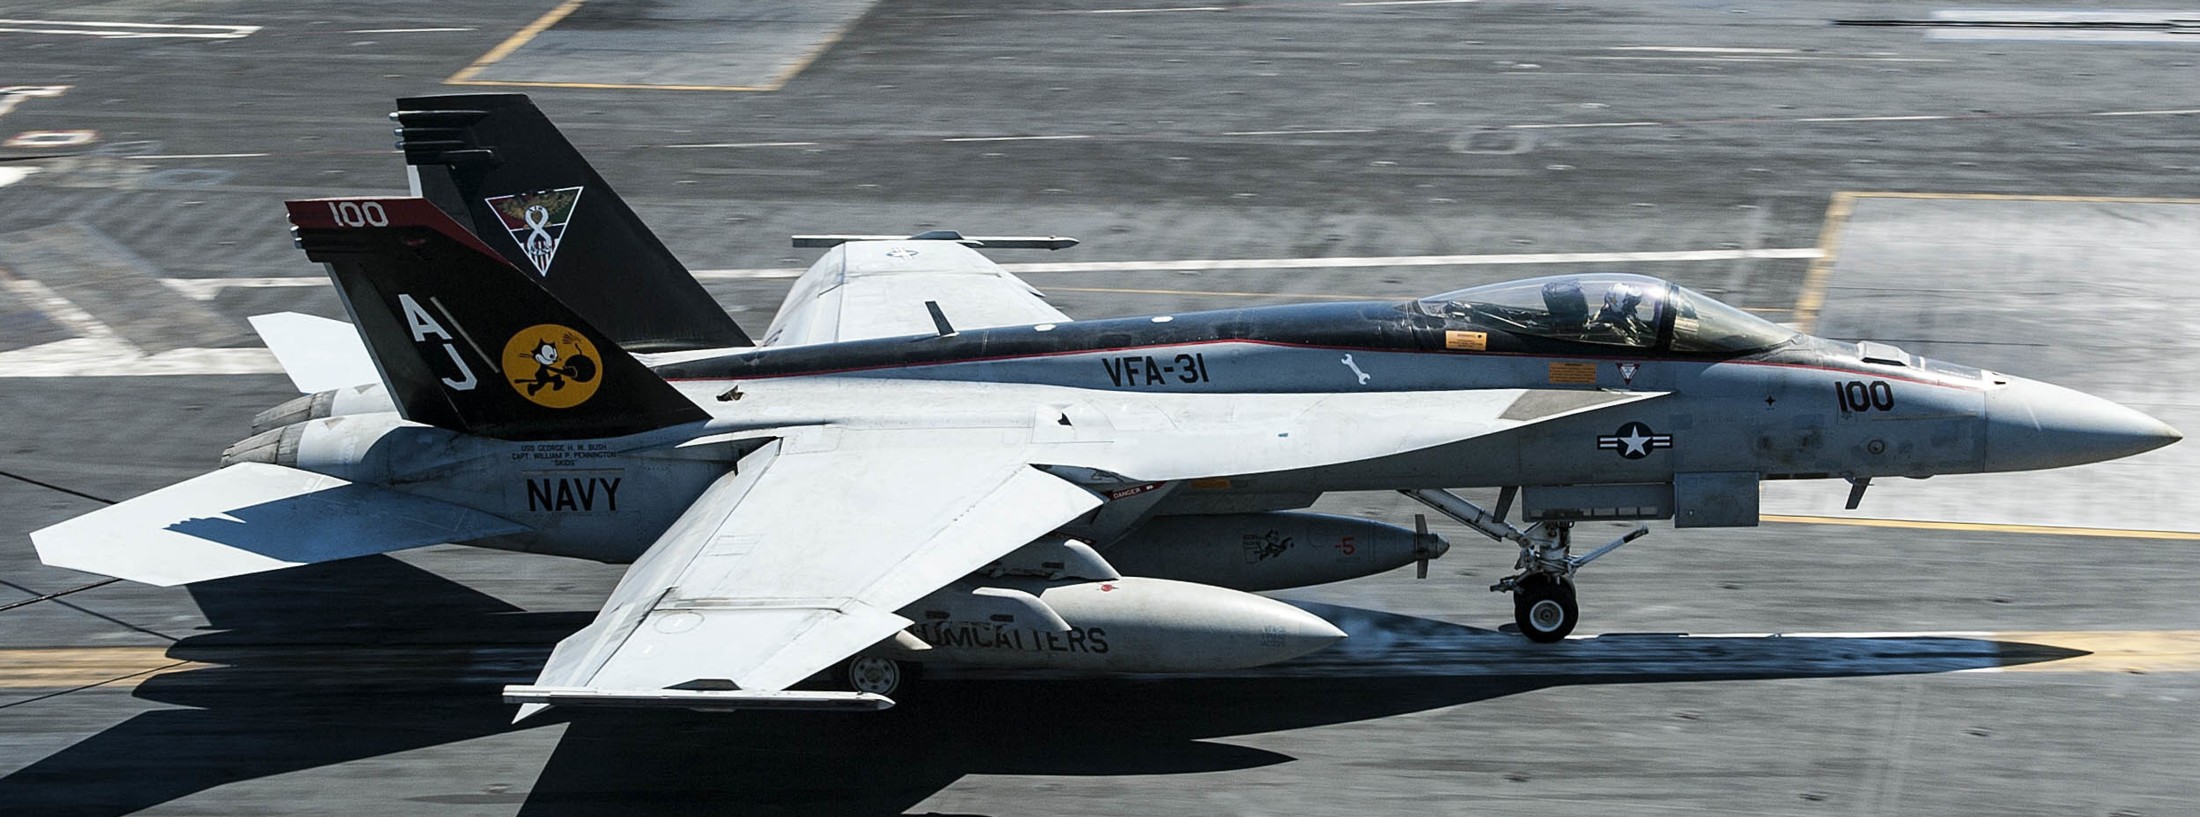 vfa-31 tomcatters strike fighter squadron f/a-18e super hornet us navy cvn-77 uss george h. w. bush cvw-8 44